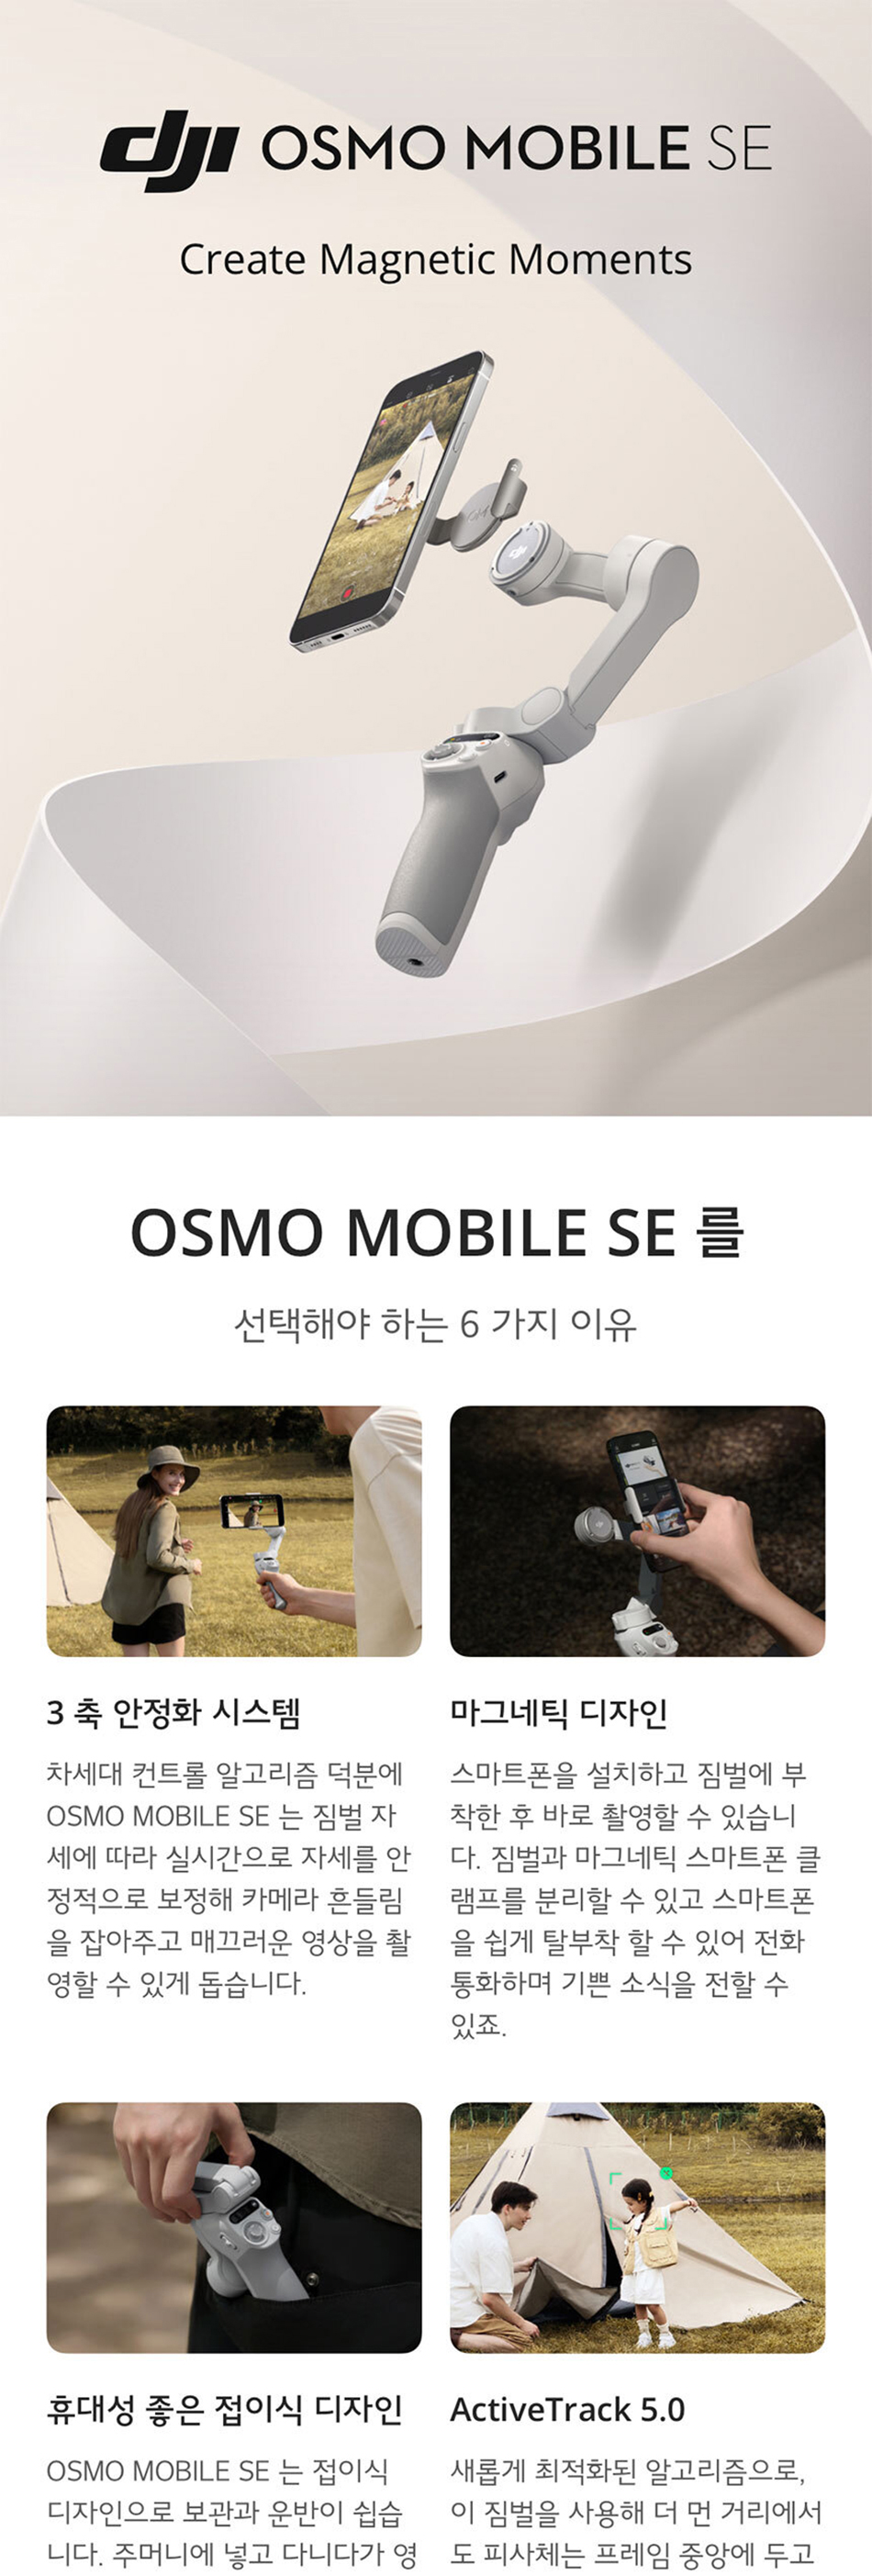 osmo_mobile_se_01.jpg